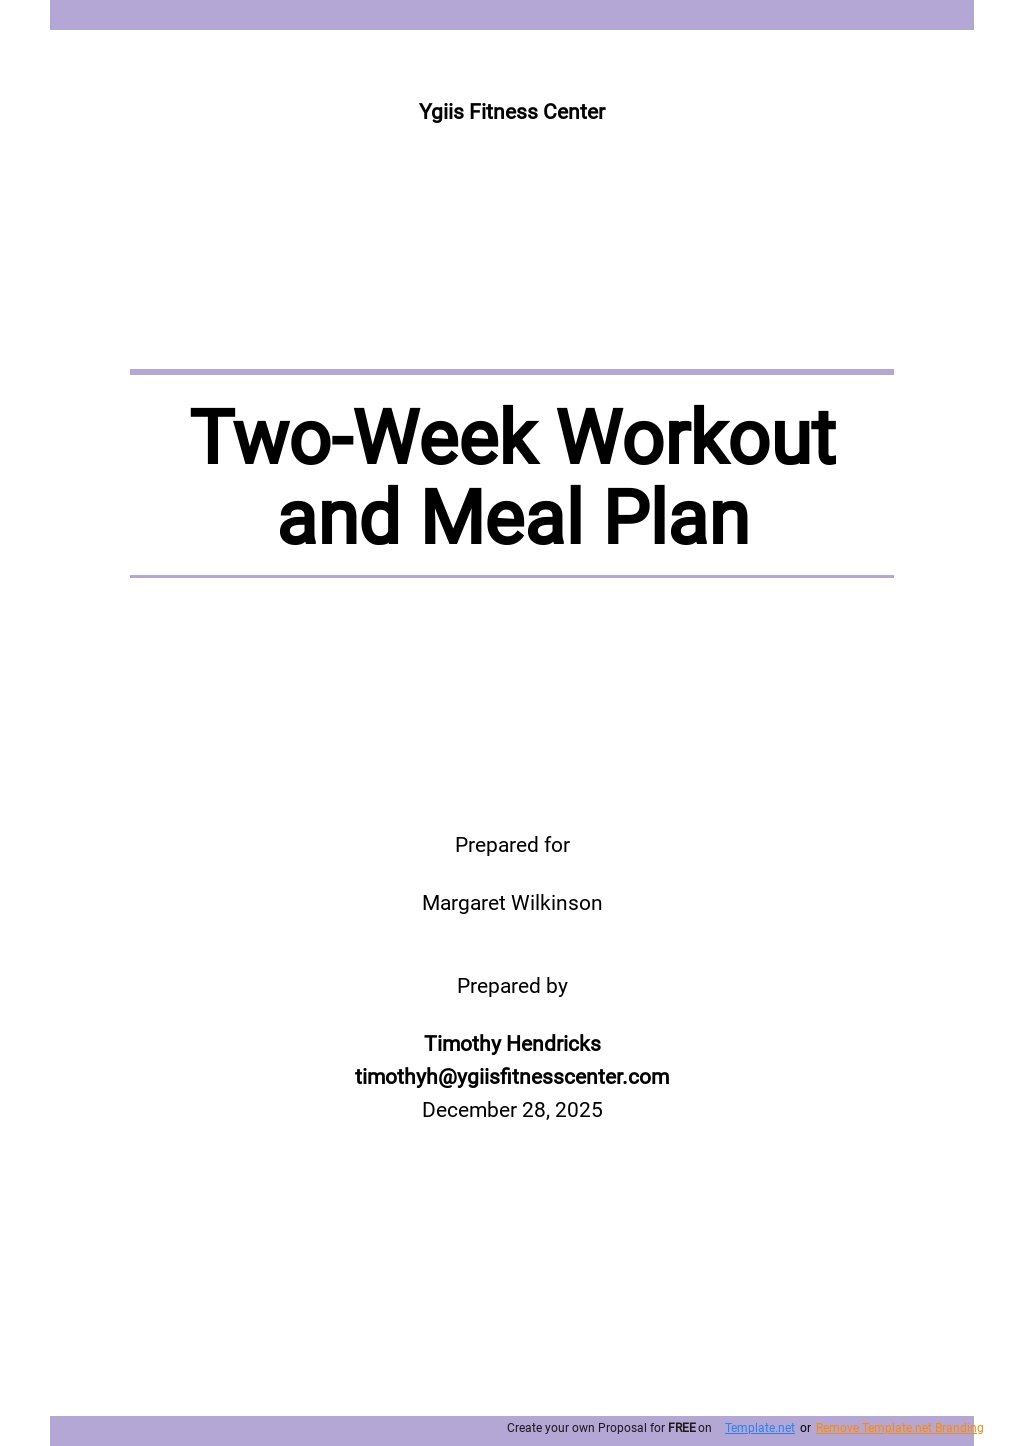 meal planning google sheet template